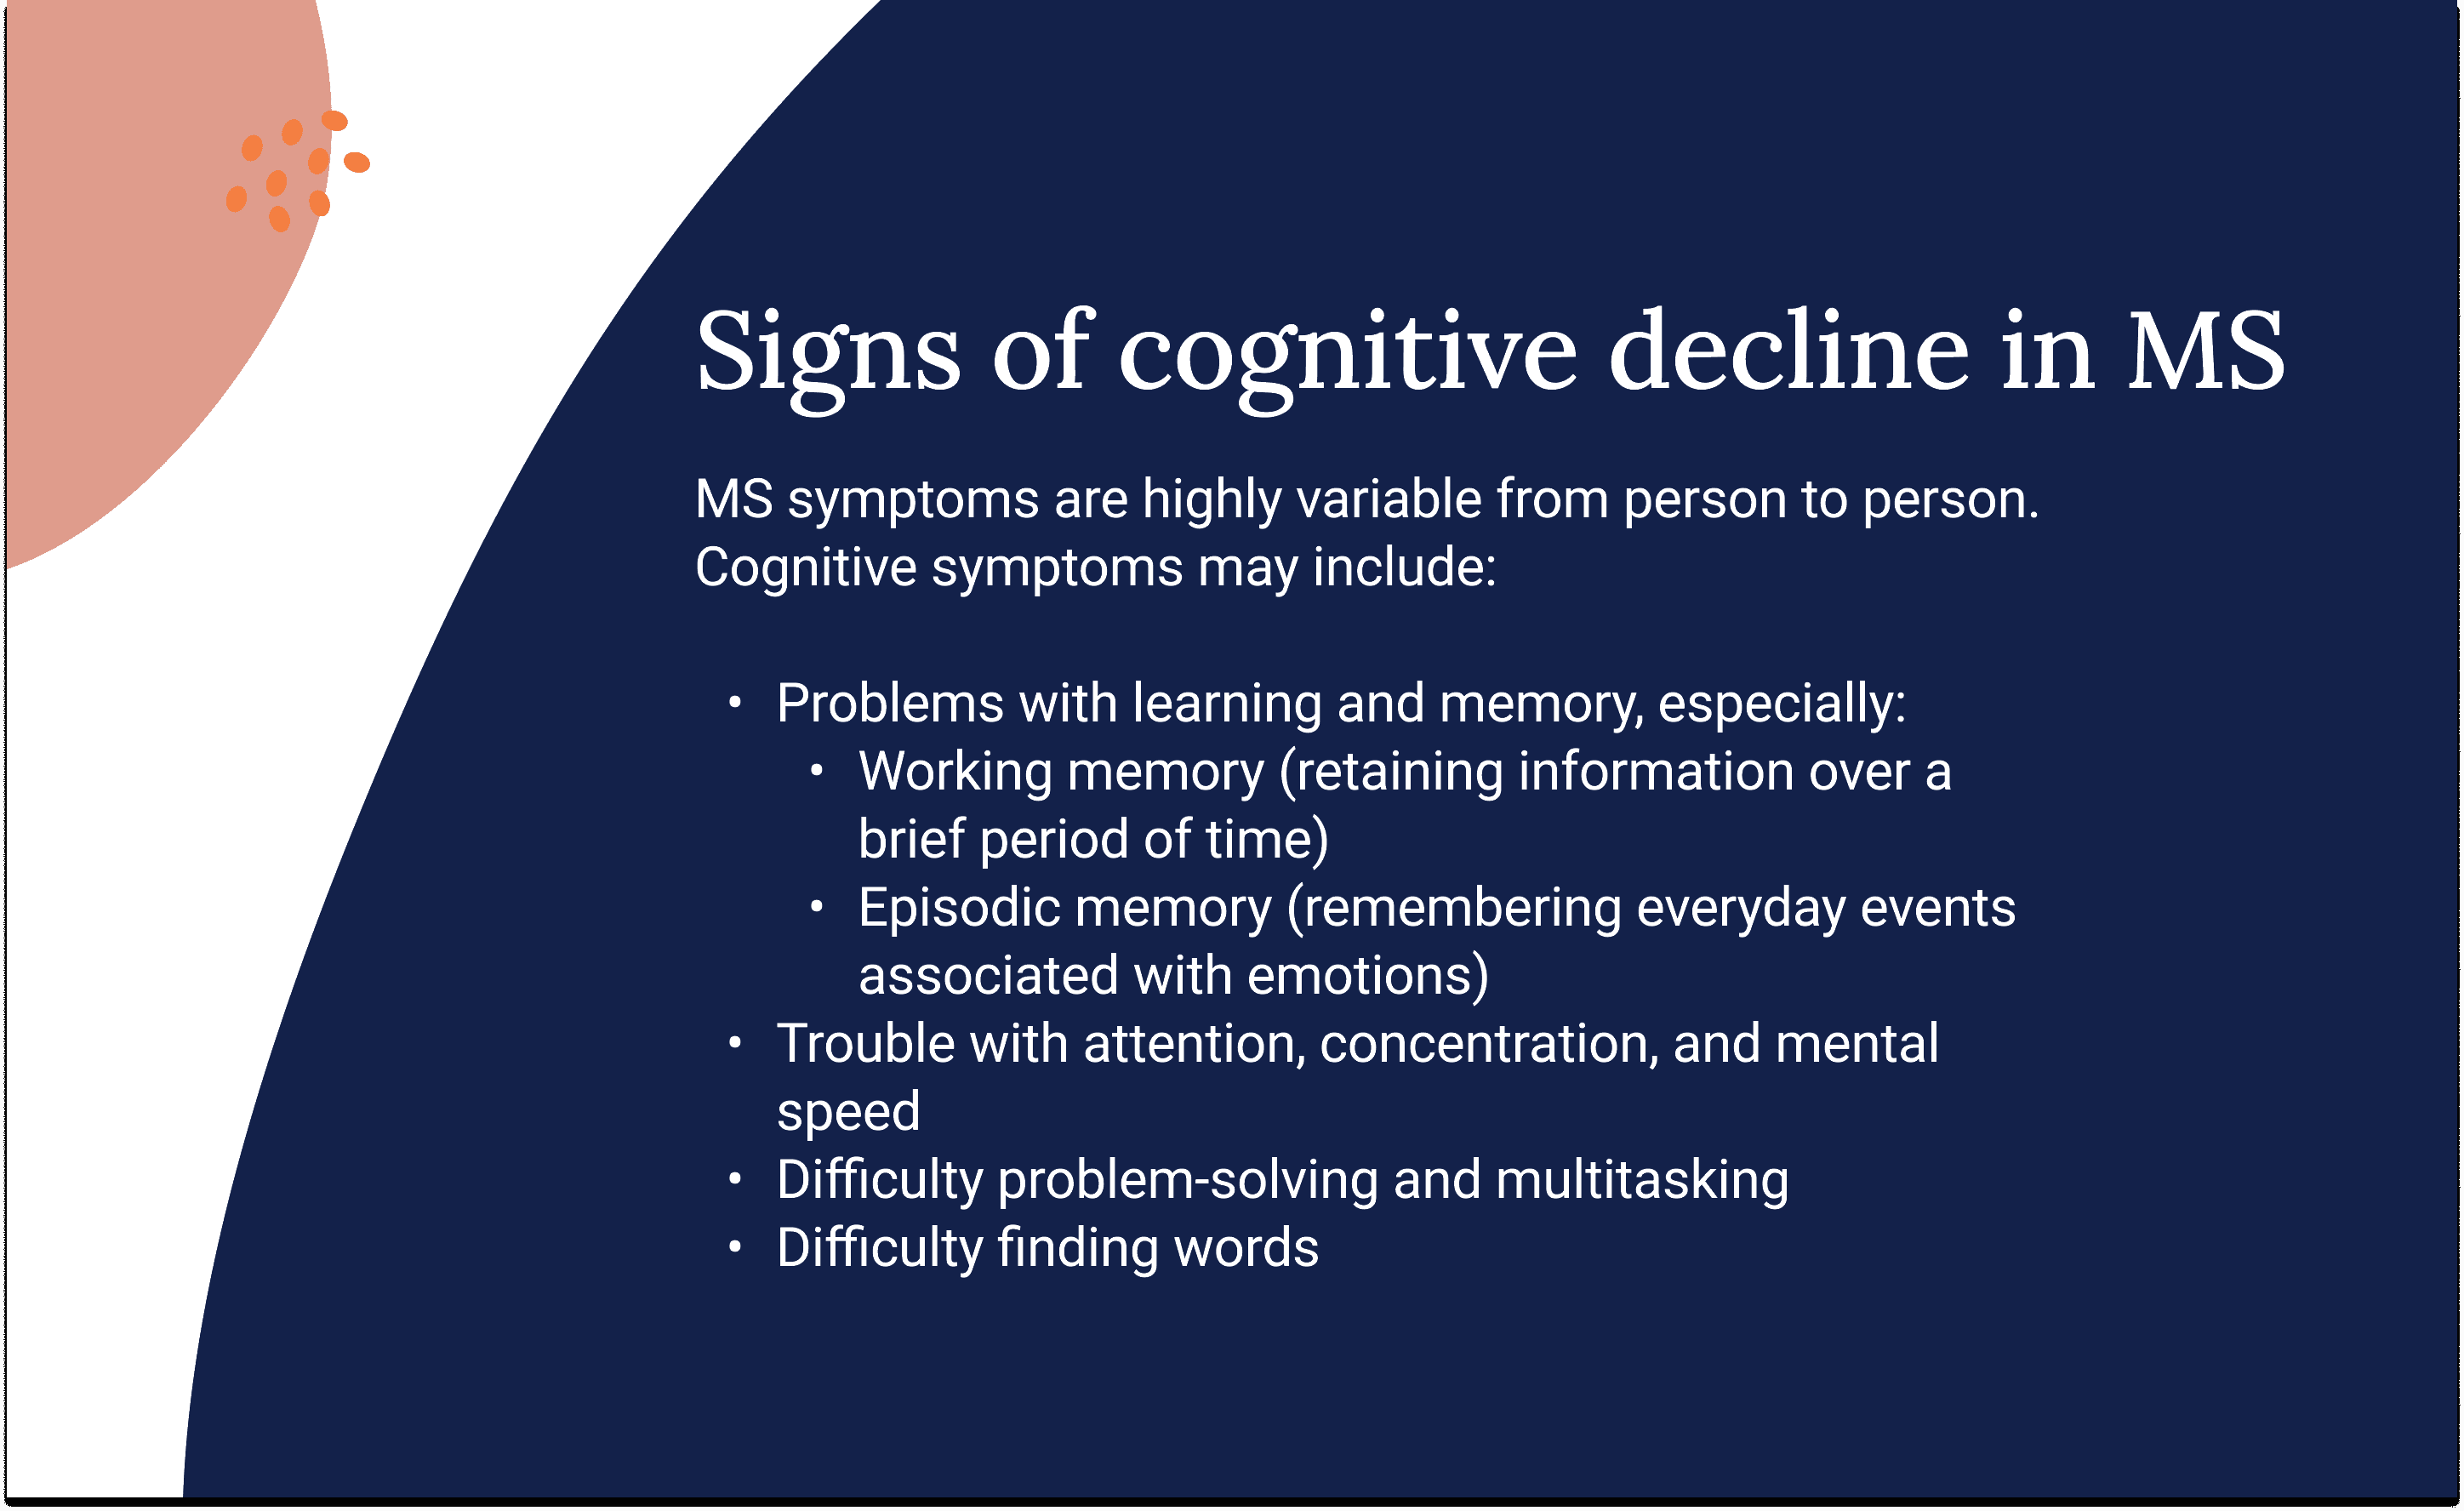 Cognitive symptoms of MS